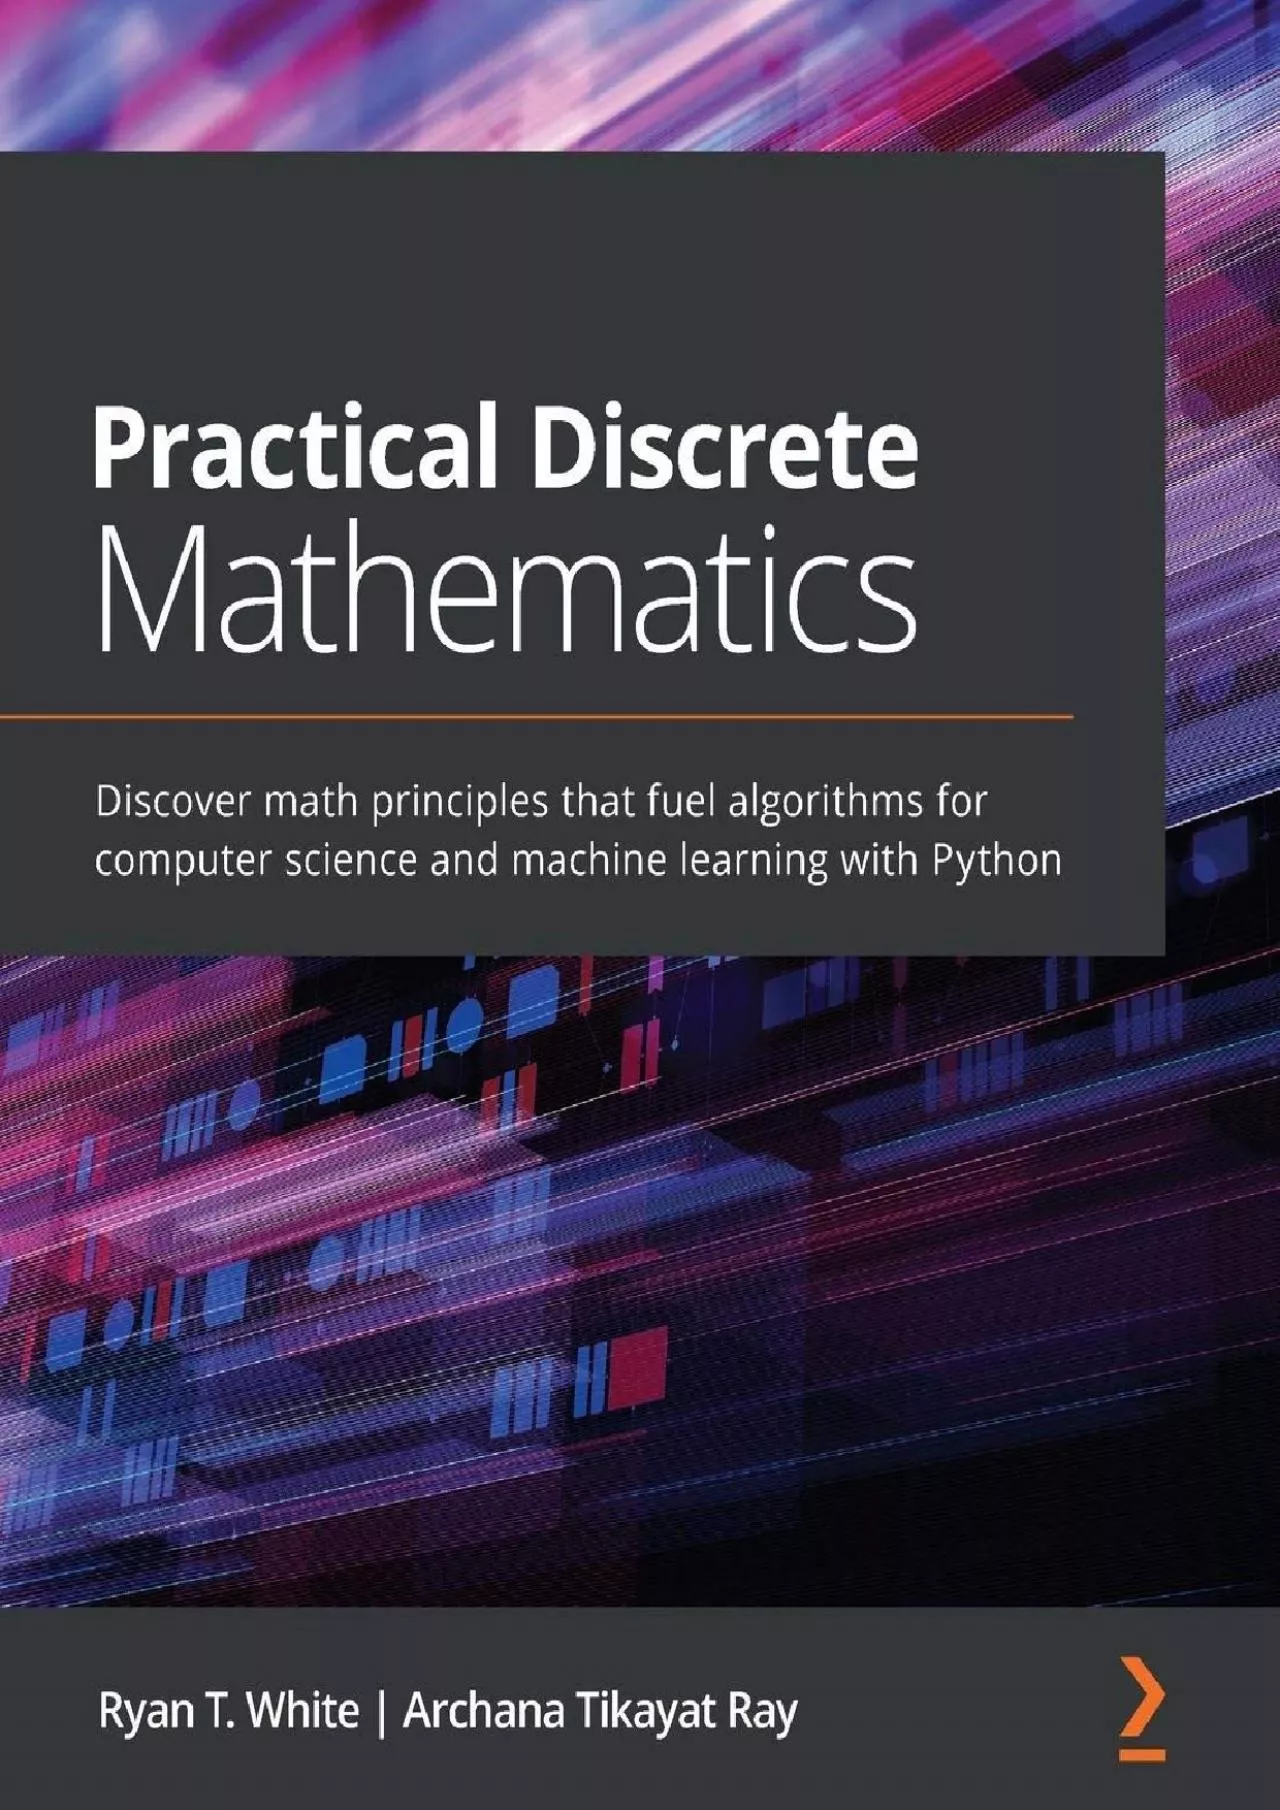 [READ]-Practical Discrete Mathematics: Discover math principles that fuel algorithms for